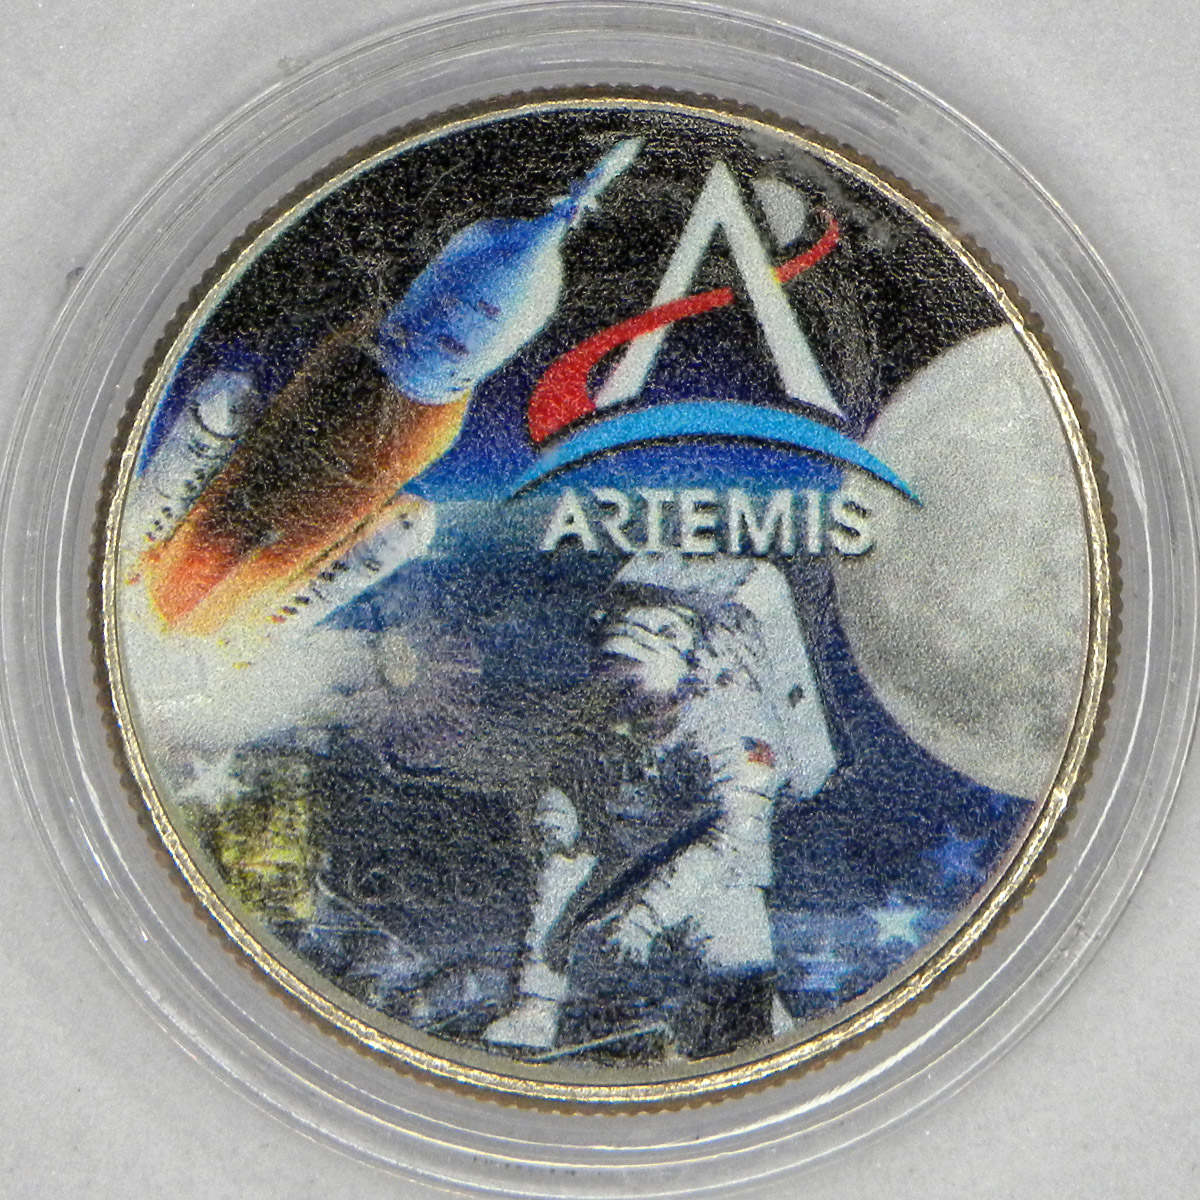 Artemis colorized half dollar (obverse)